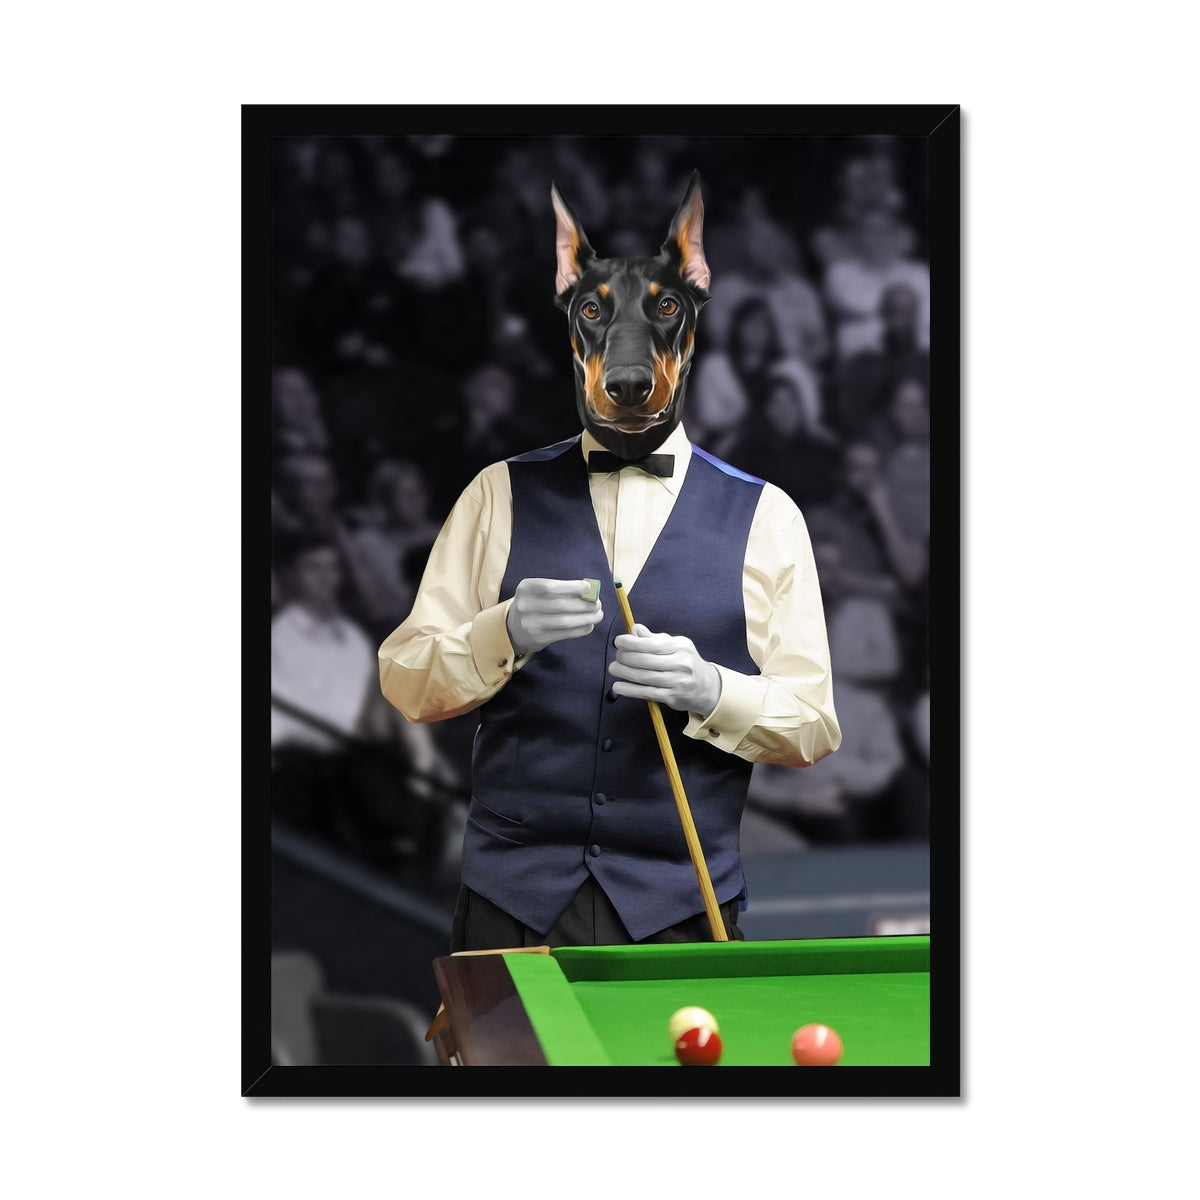 The Snooker Player: Custom Pet Portrait